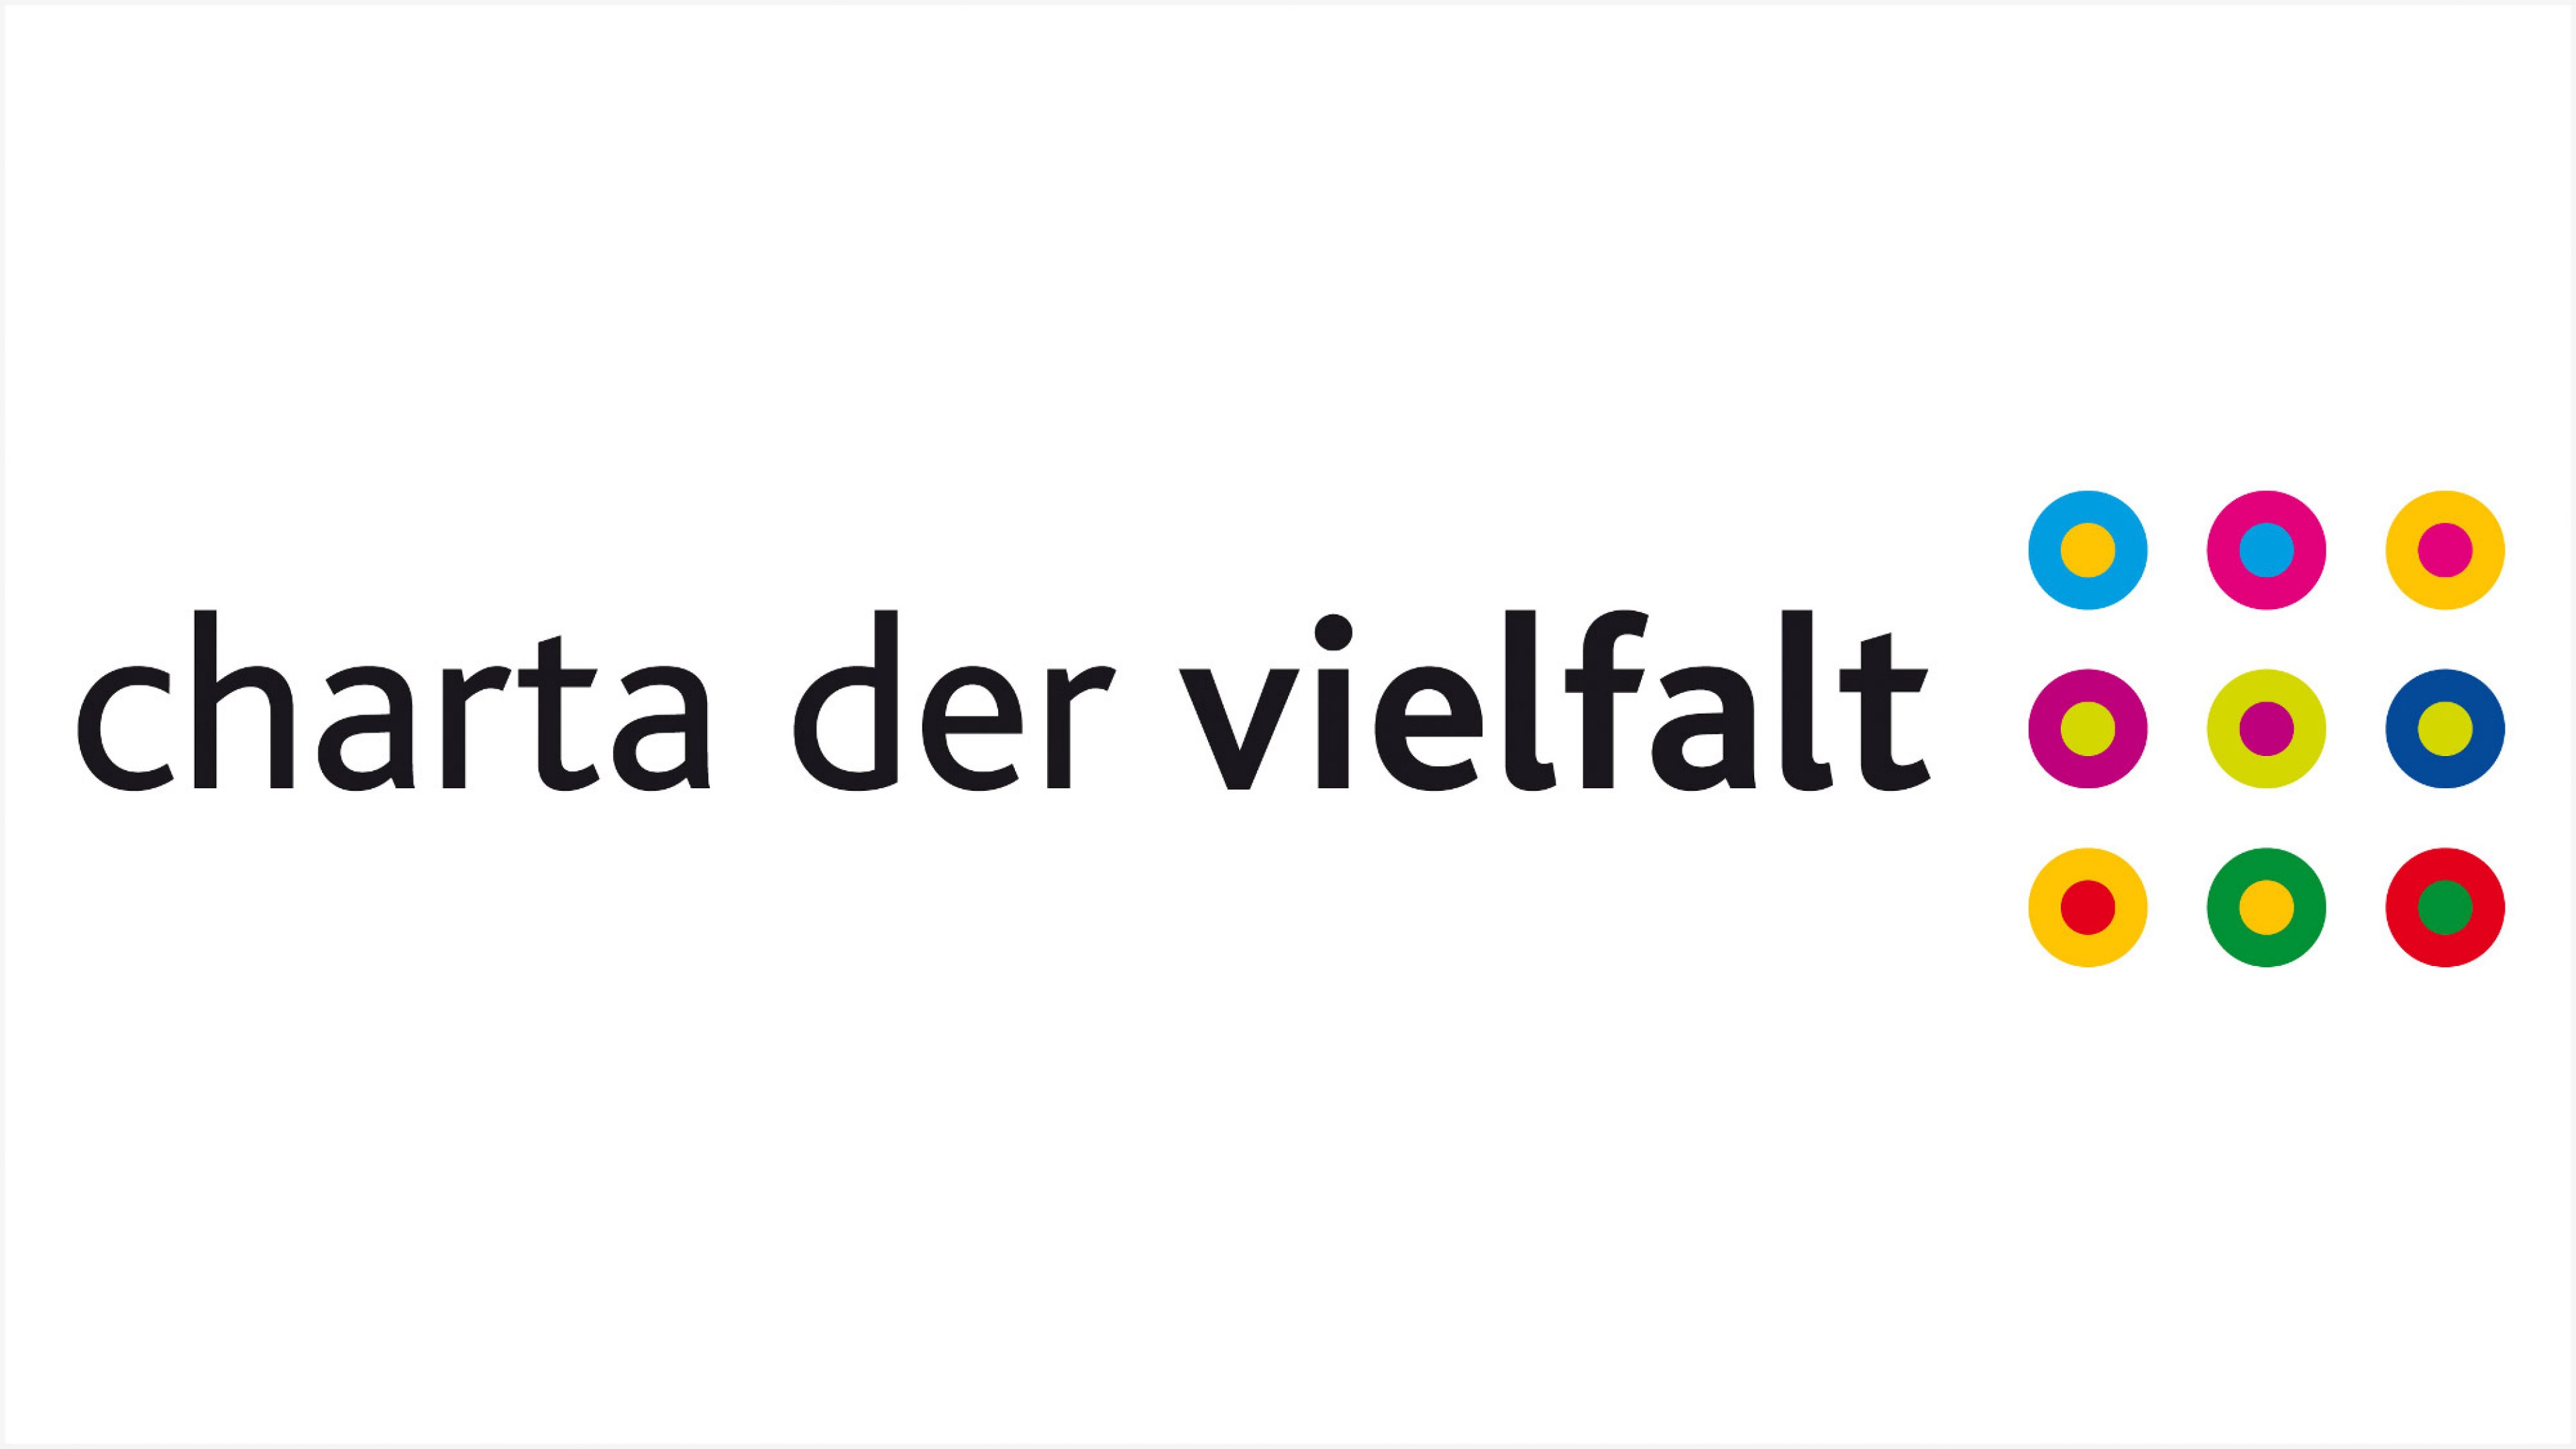 charta-der-vielfalt-logo.jpg.img.3840.medium.jpg